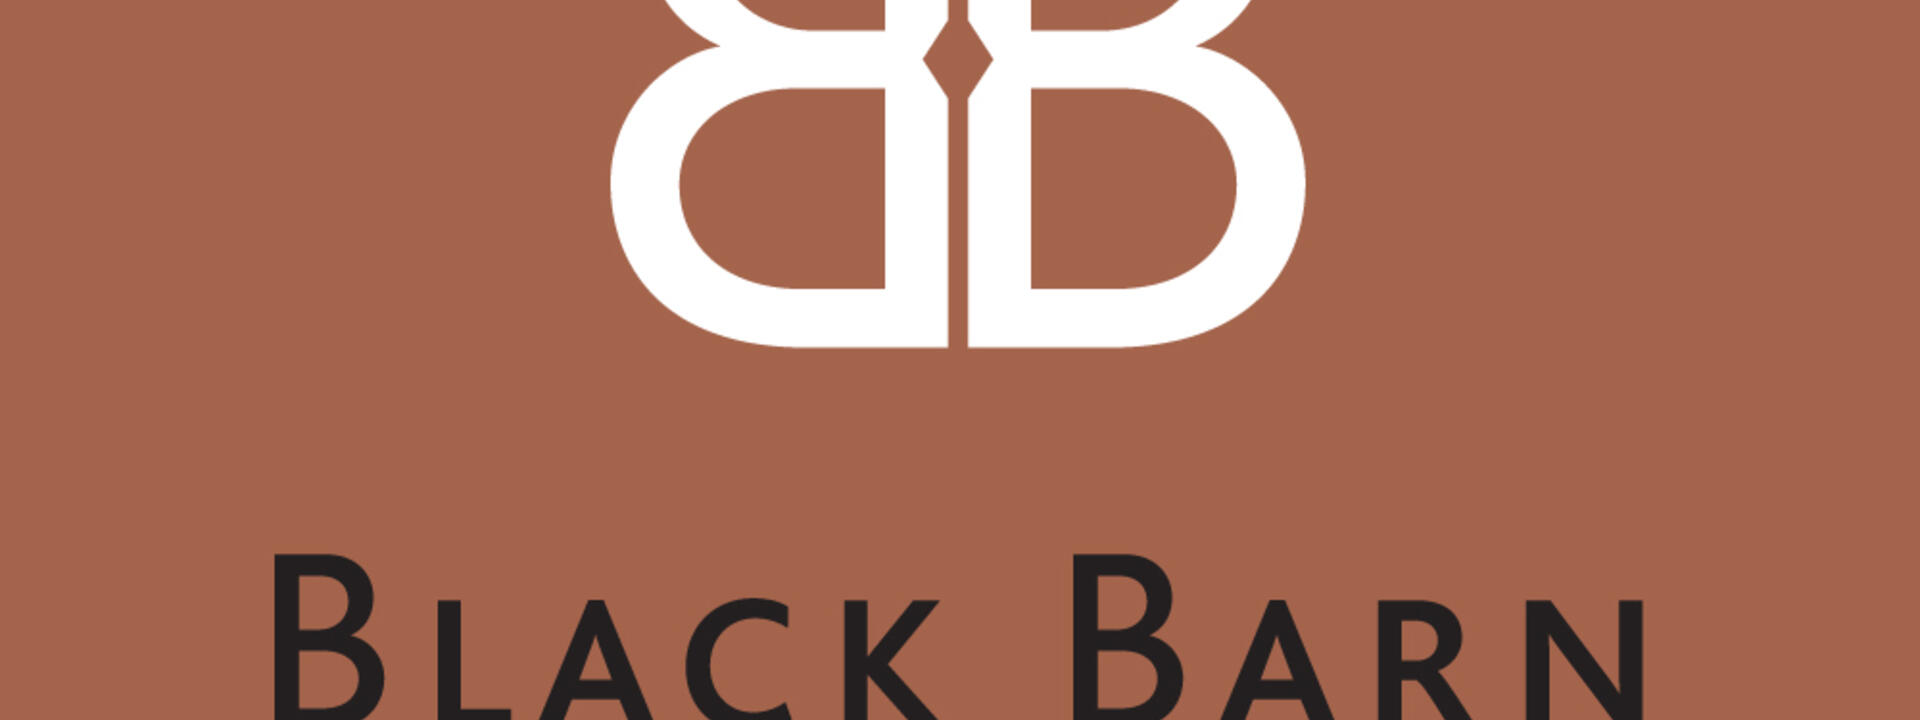 Black-Barn-Retreats-logo-1000x1000px.jpg